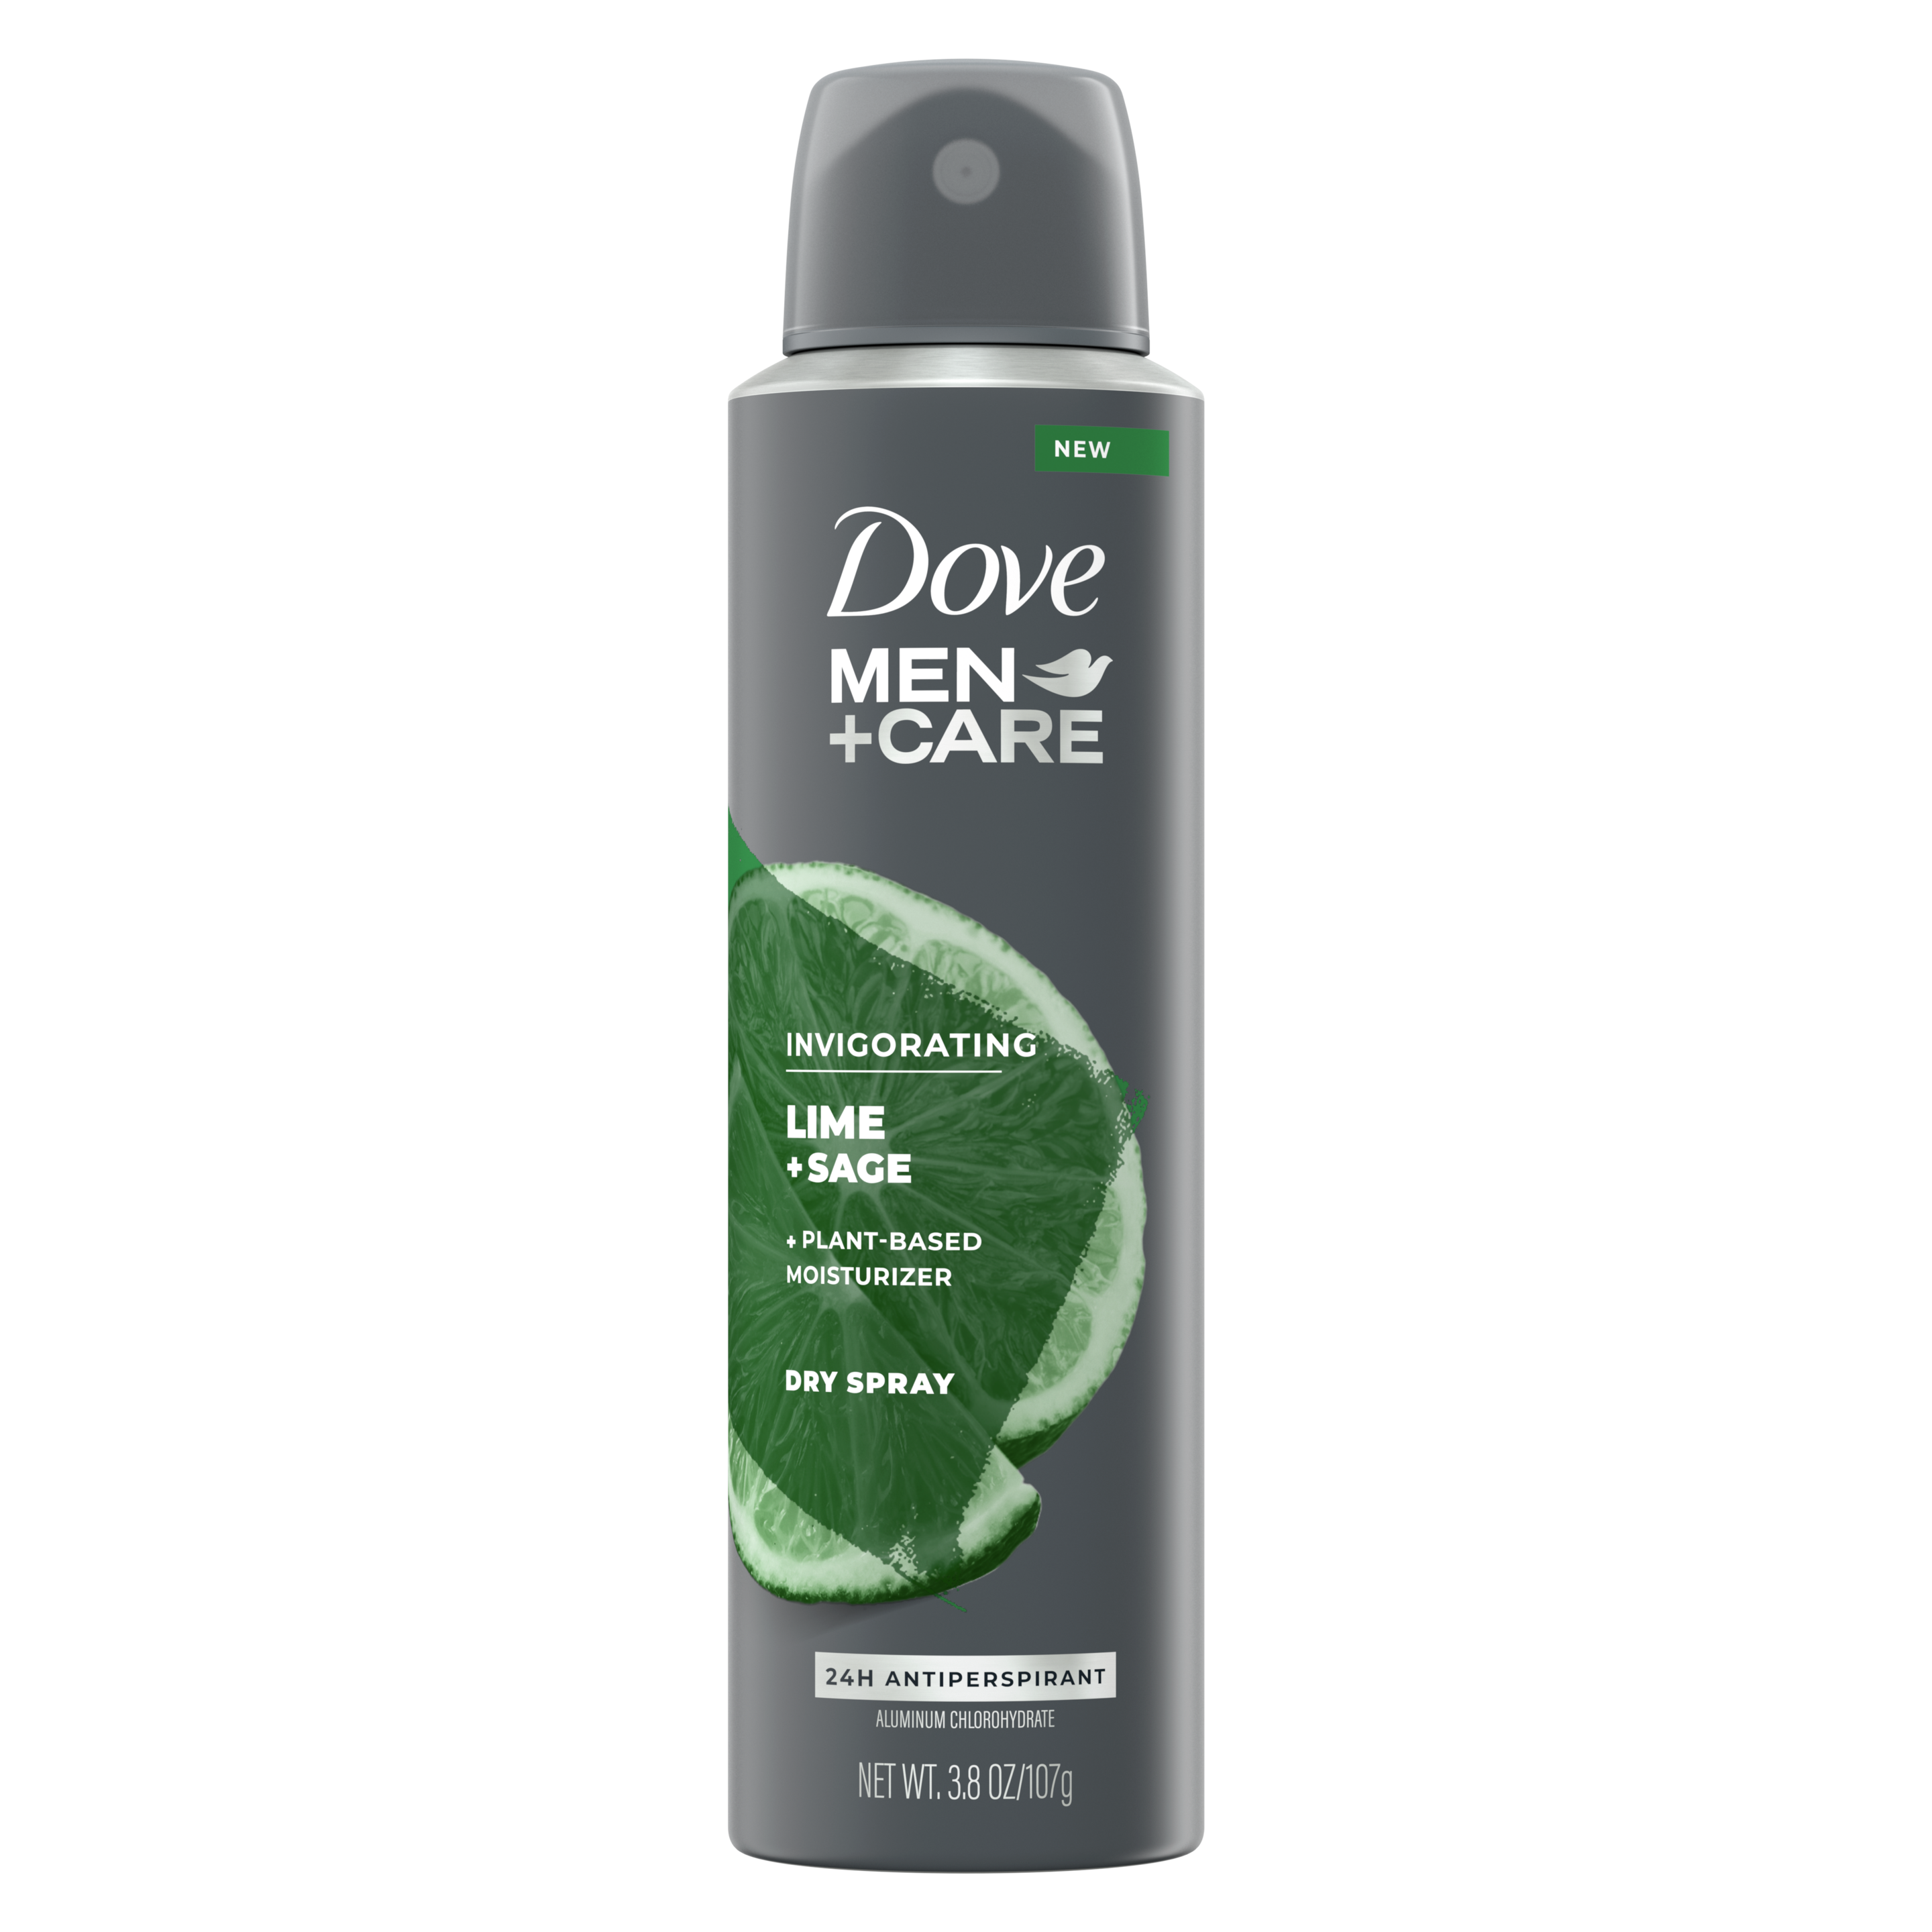 Dove Men+Care Lime + Sage Dry Spray 3.8oz front